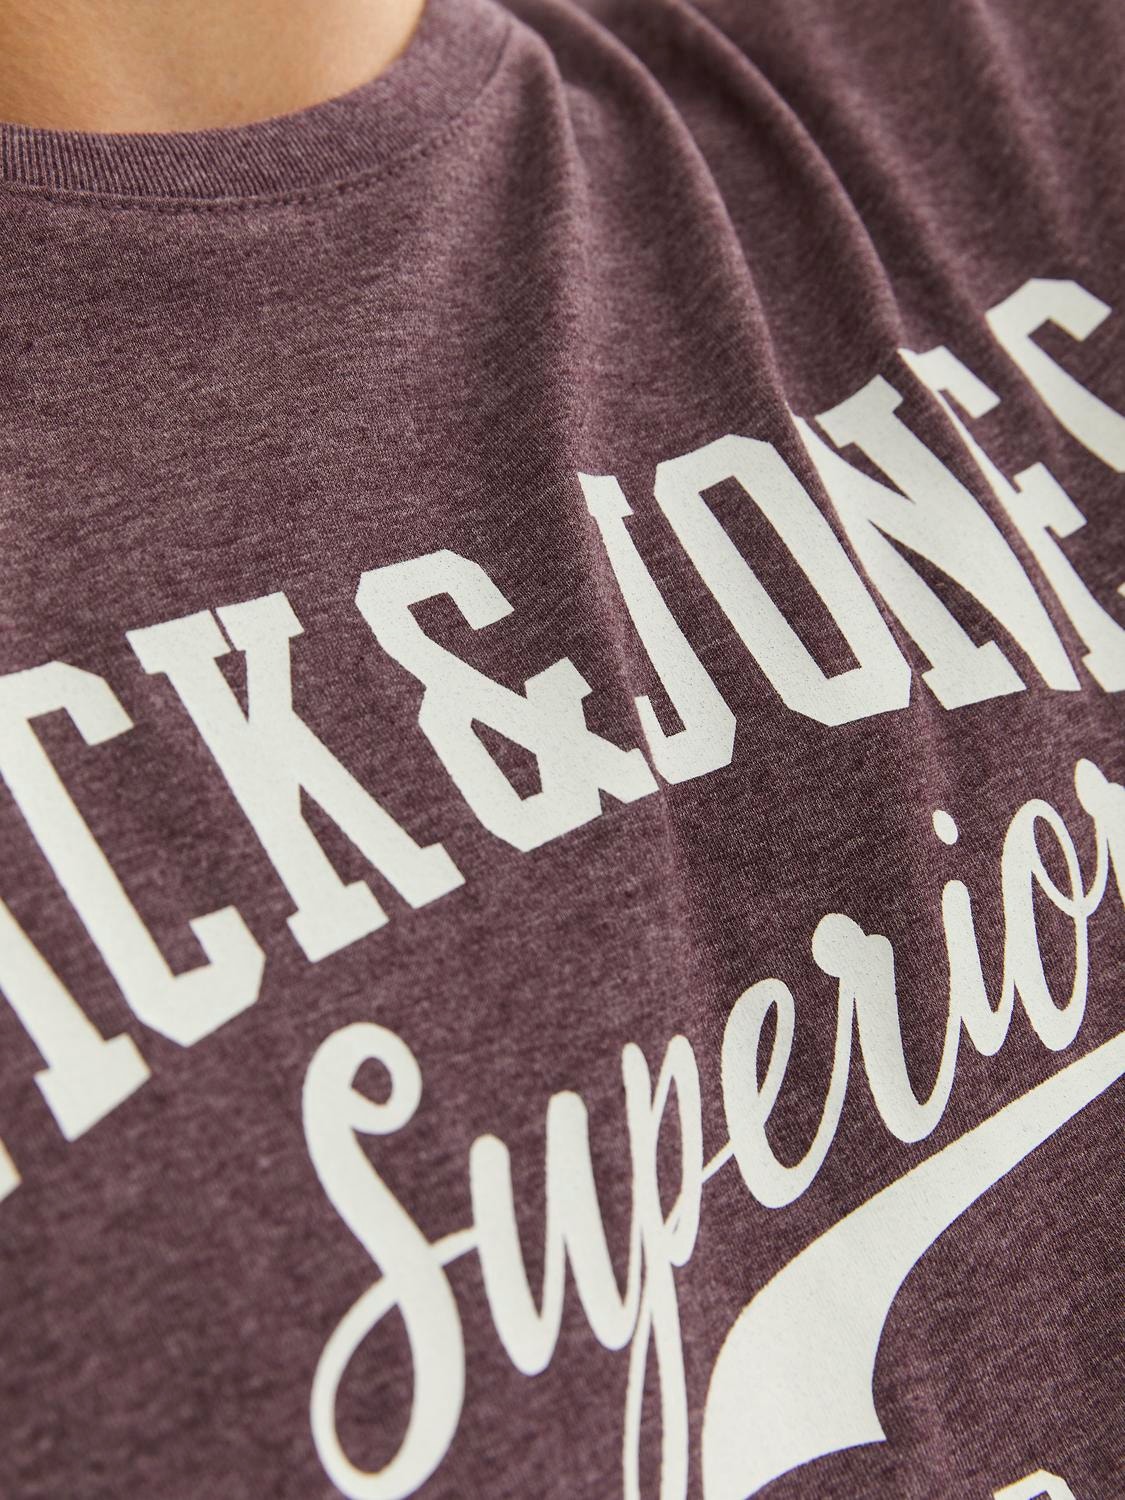 Jack & Jones Logo Crew neck T-shirt -Port Royale - 12238252